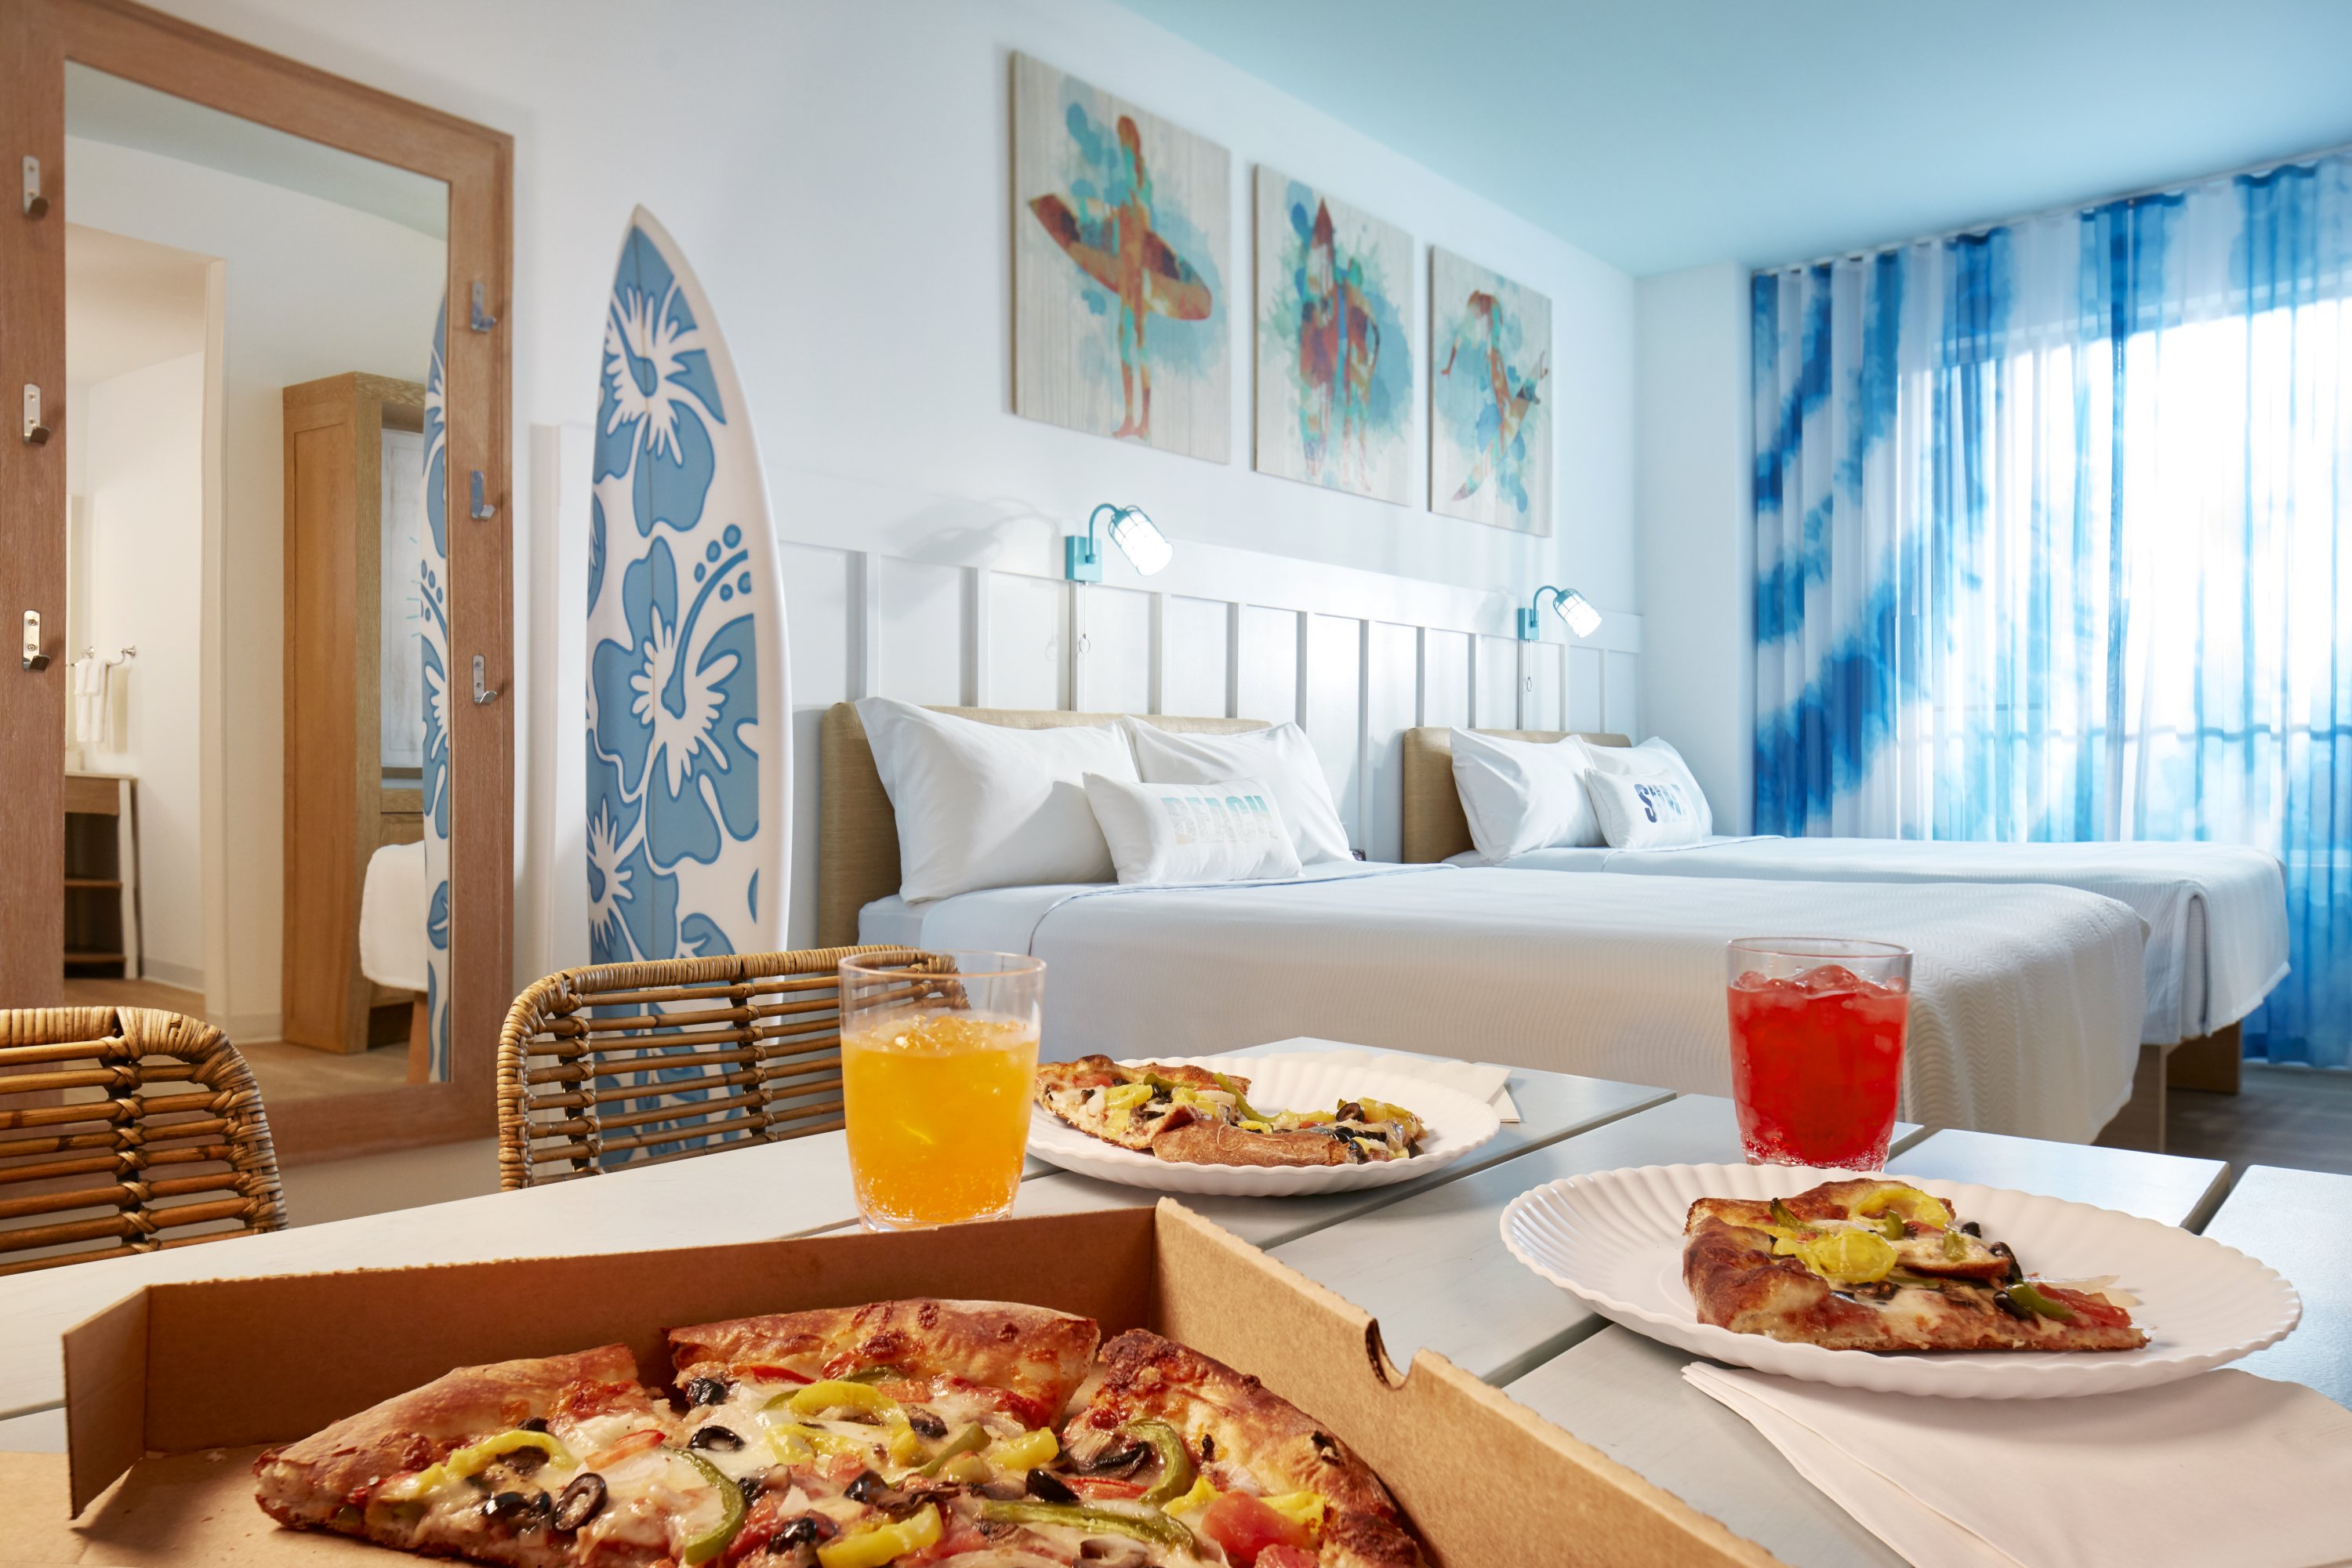 Universal Orlando Resort Unveiled Universal’s Endless Summer Resort – Surfside Inn and Suites & Dockside Inn and Suites